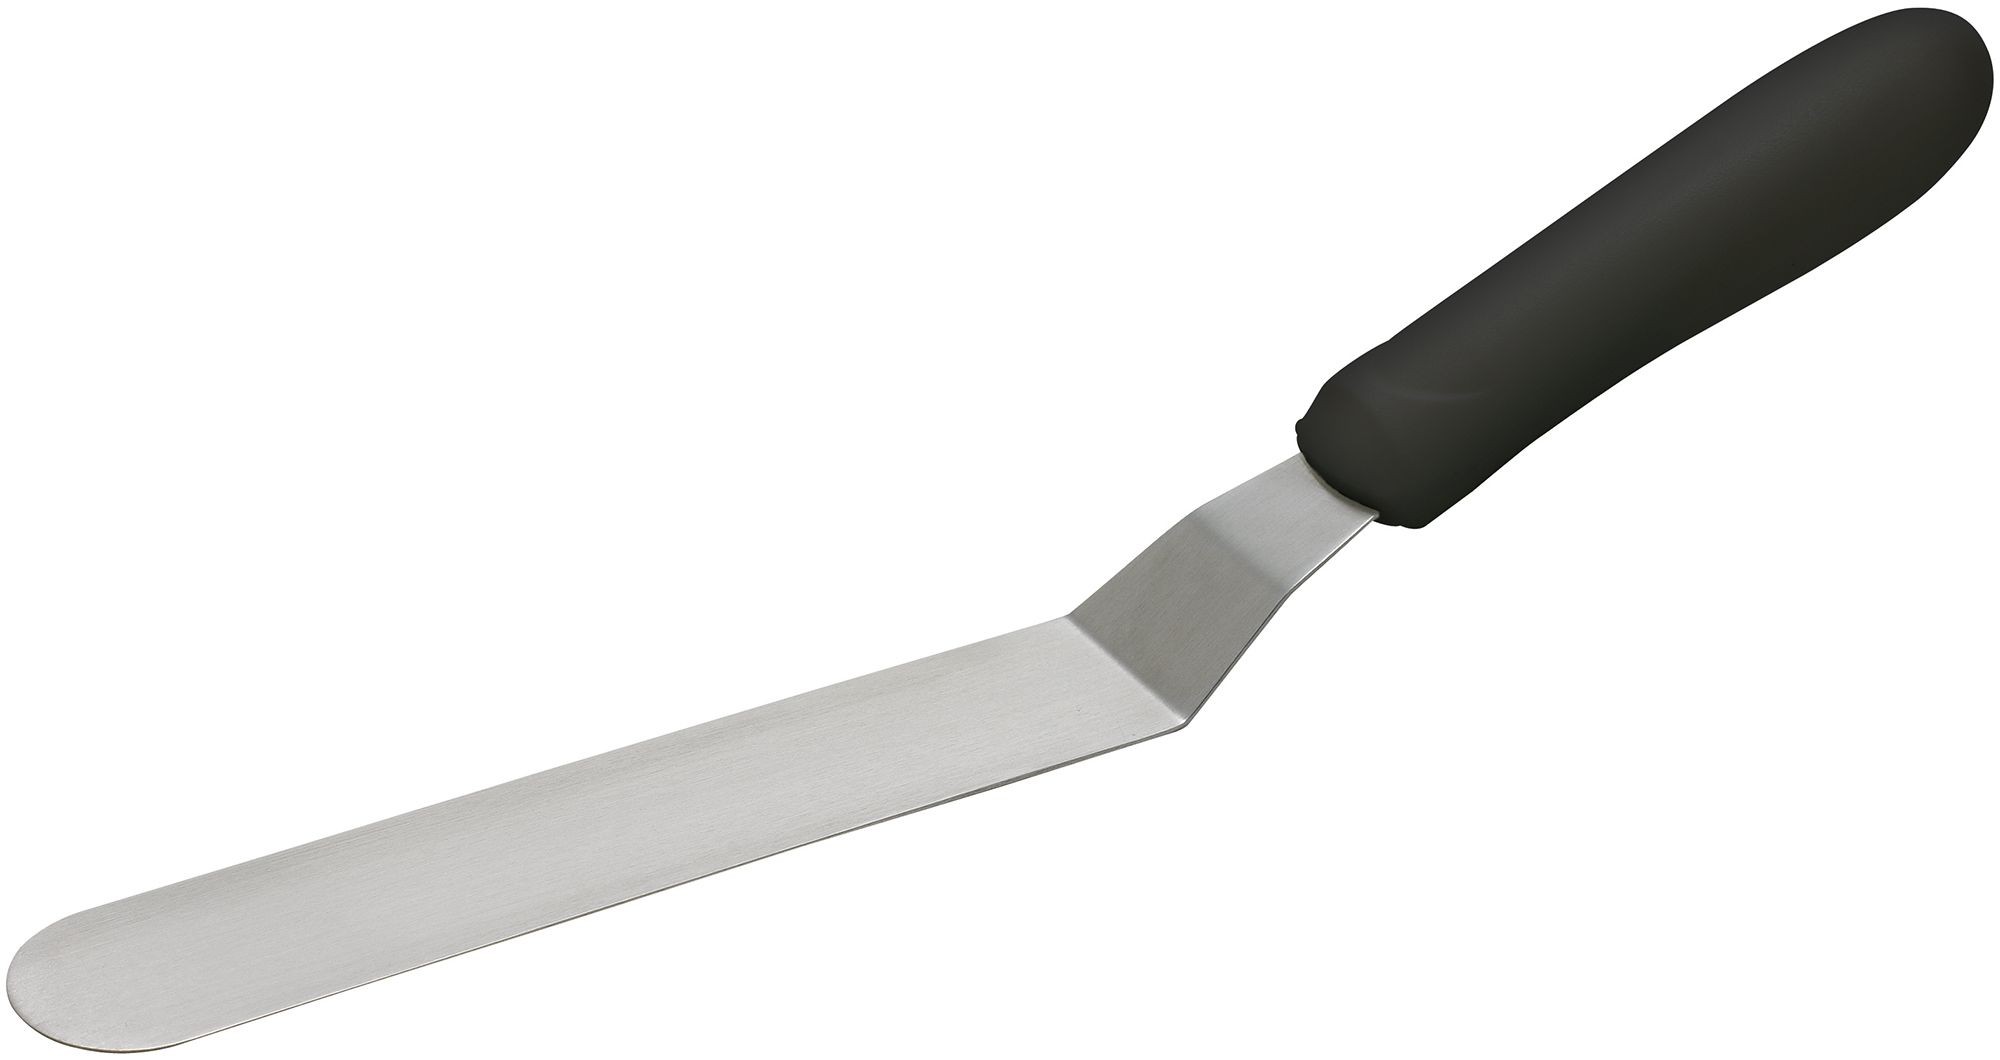 Winco TKPO-7 Offset Spatula 7-3/4" Blade, Black Polypropylene Handle